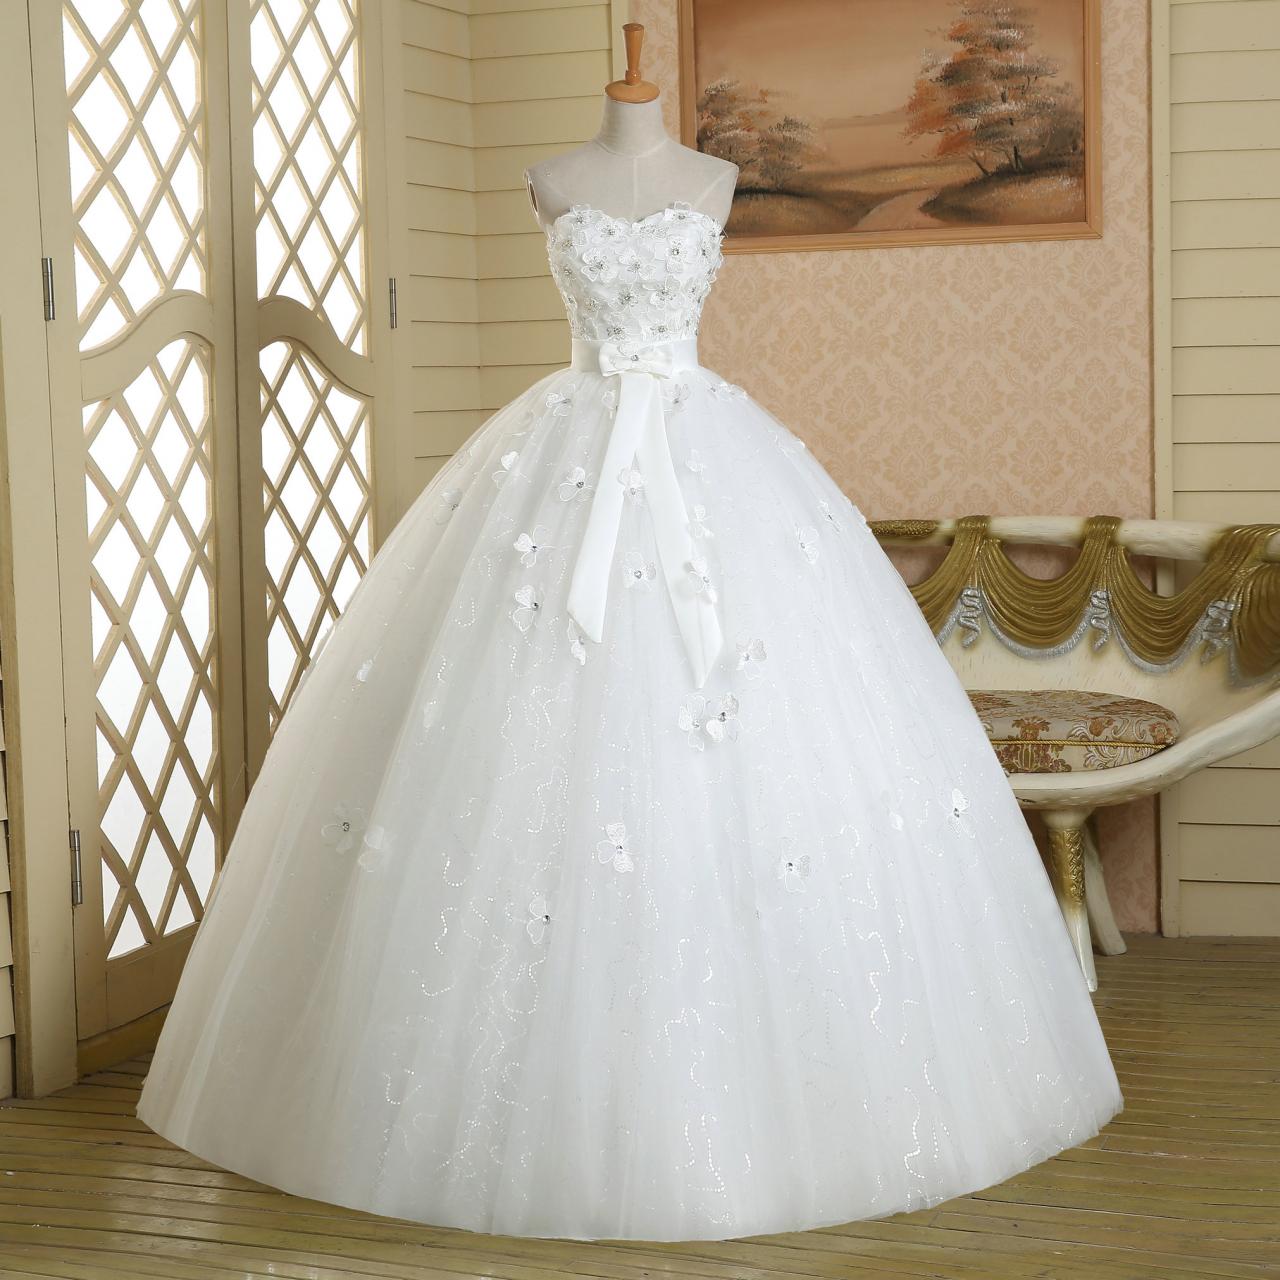 Vestido De Noiva Vintage Lace Bow 60's Gothic White Long Ball Gown Wedding Dress Bridal Gown Dresses For Bride Wedding Gown